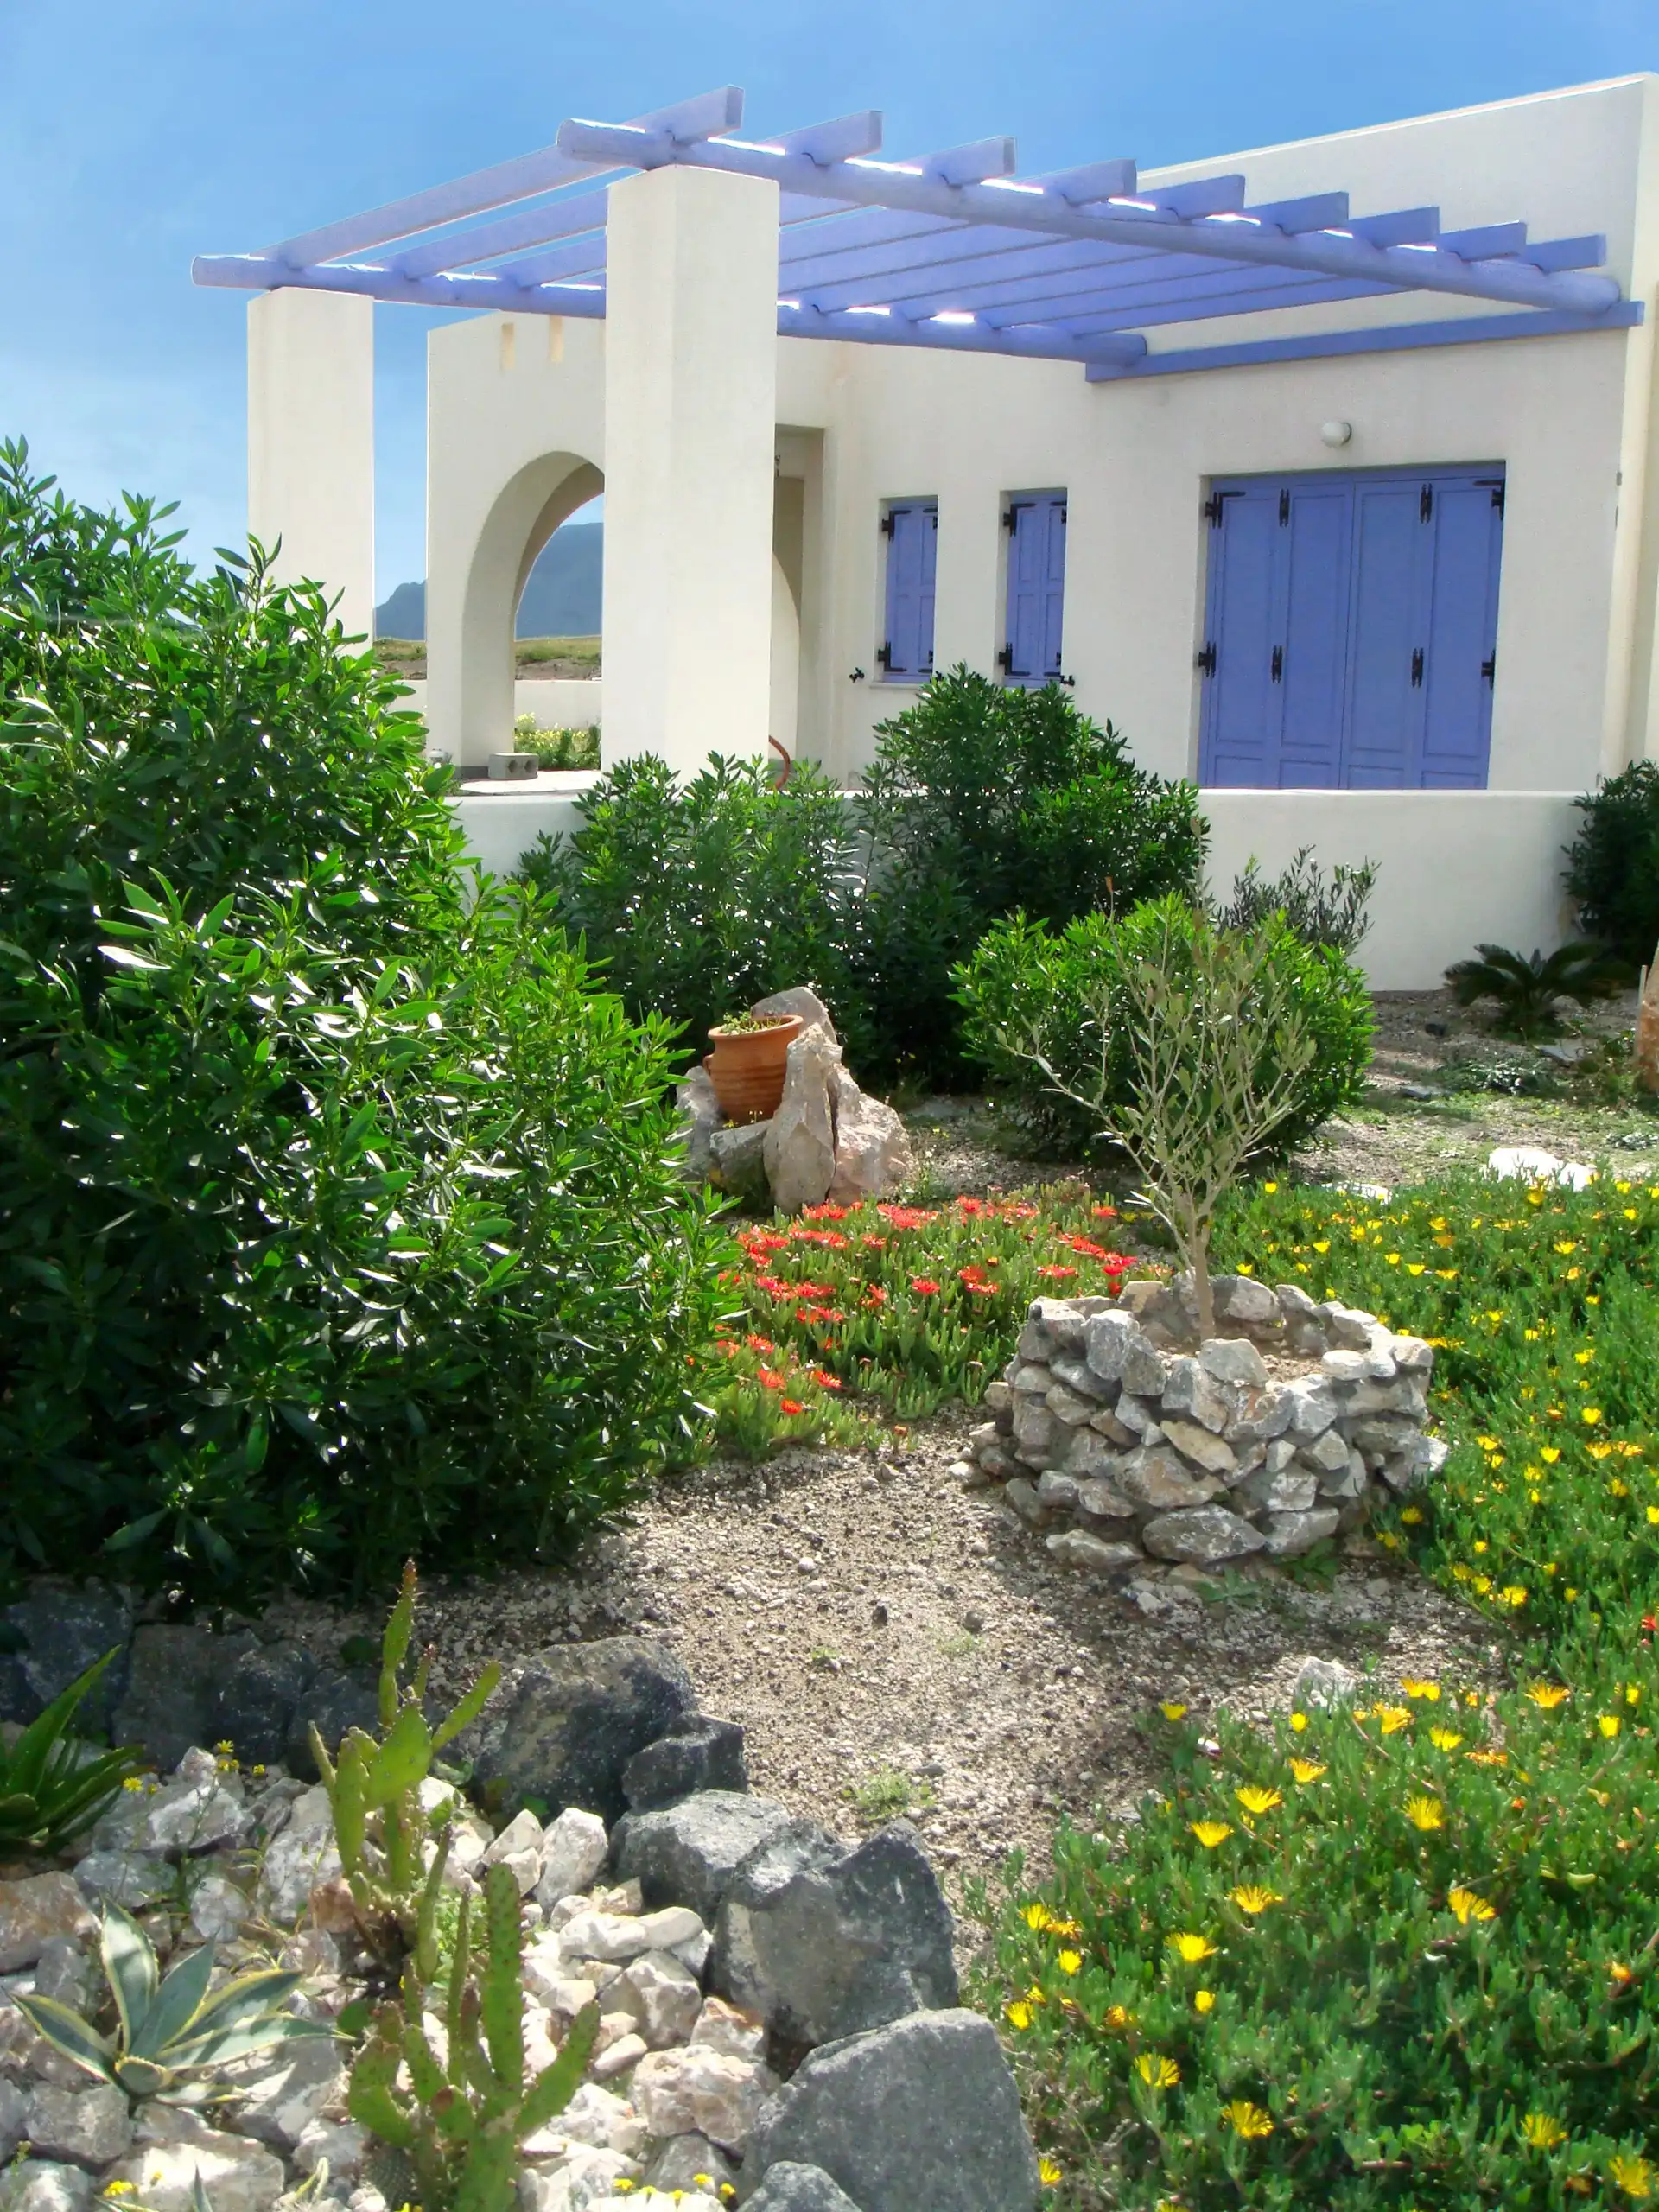 Acropolis Homes - Santorini Villas - Biuro Nieruchomości - Zdjęcie Nieruchomości - Ogród